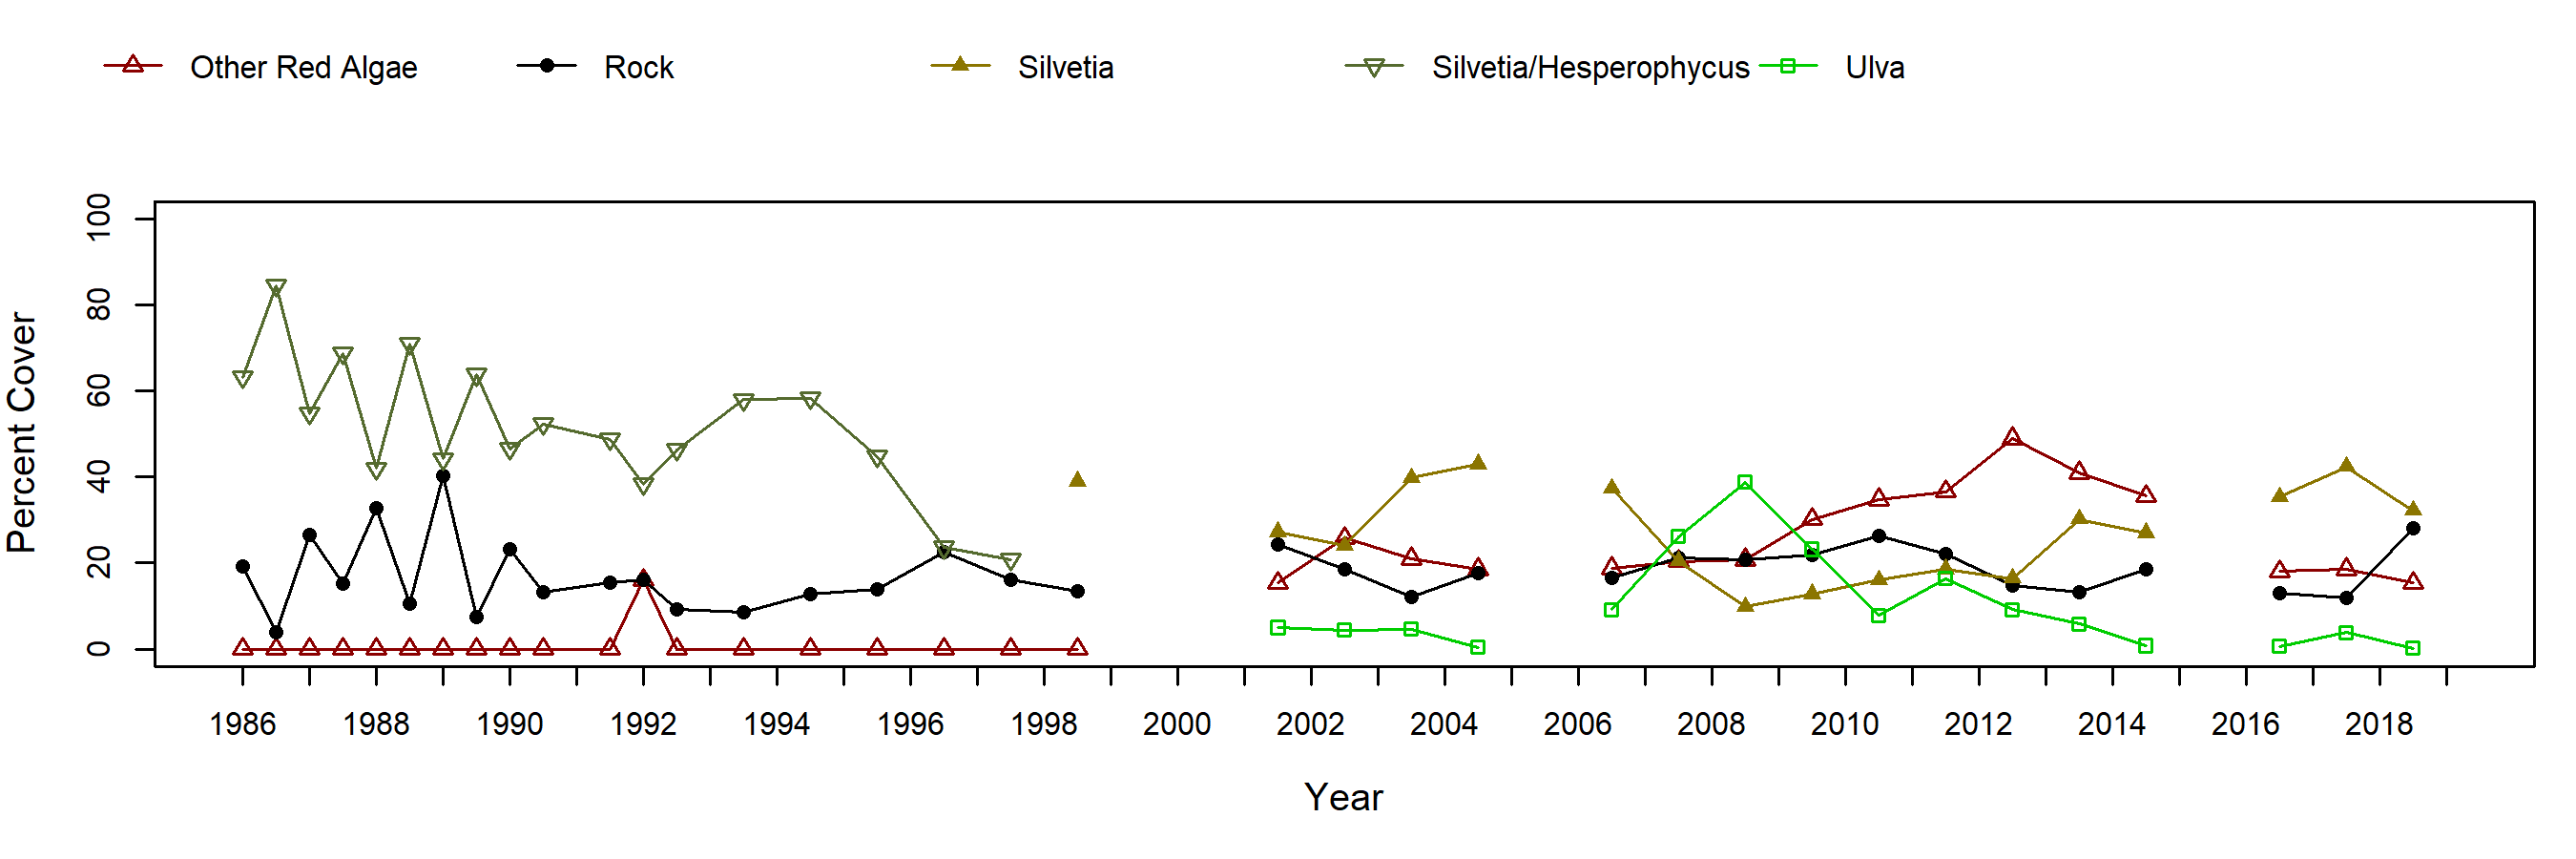 Sea Lion Rookery Silvetia trend plot